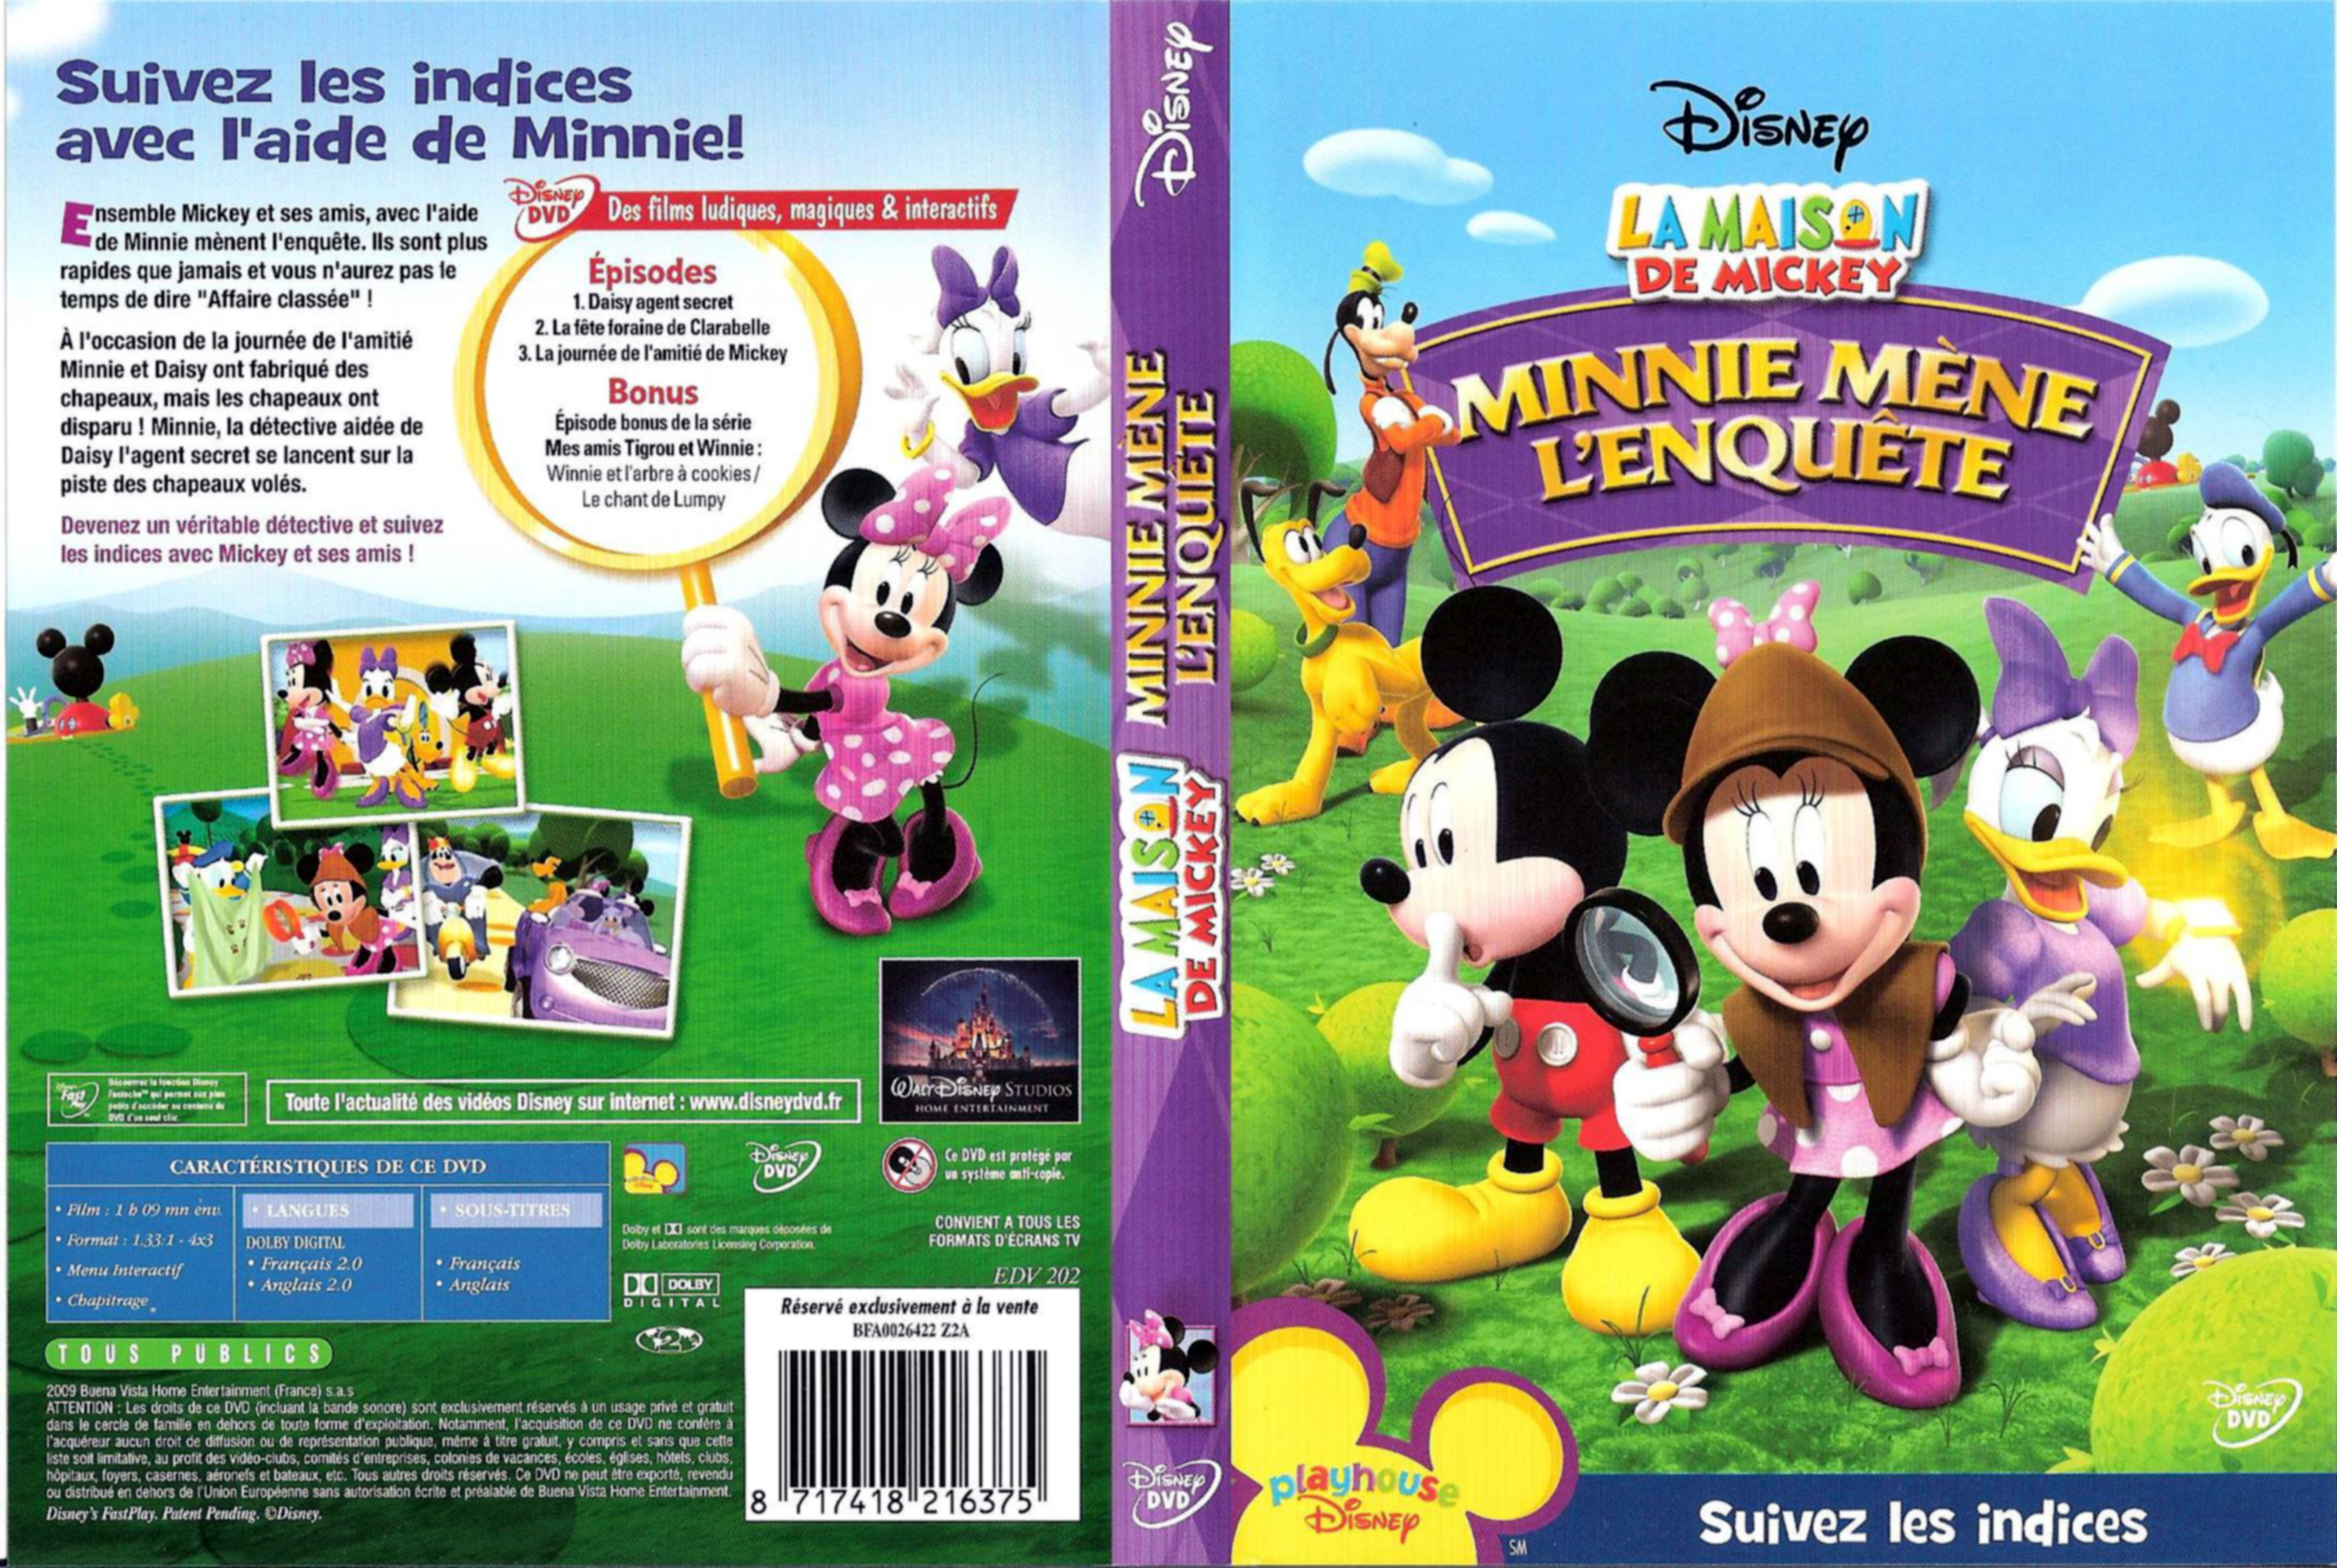 Jaquette DVD La maison de Mickey - Minnie mne l